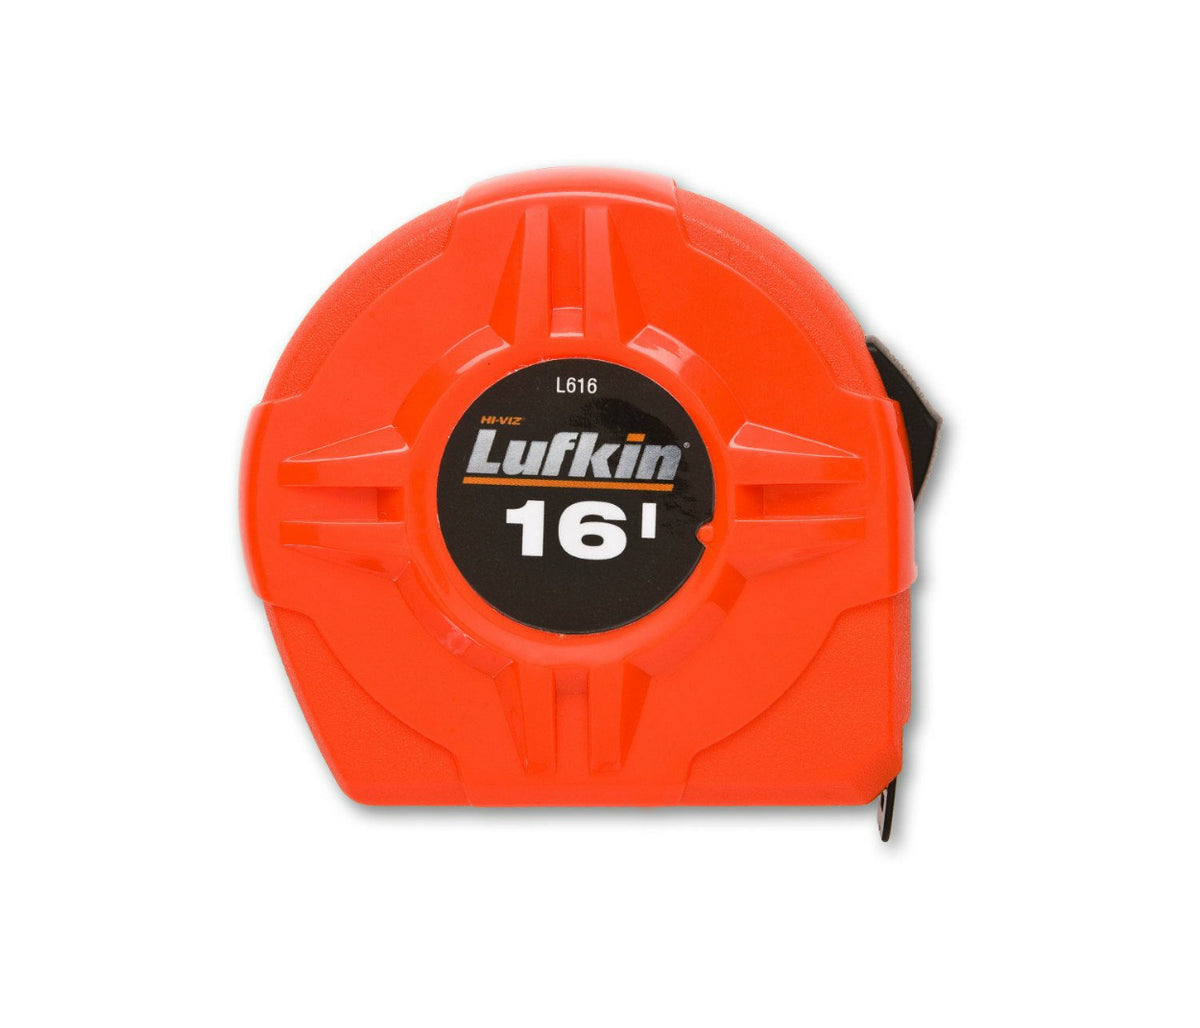 Lufkin L616N Tape Measure, Orange Case, 16 ft